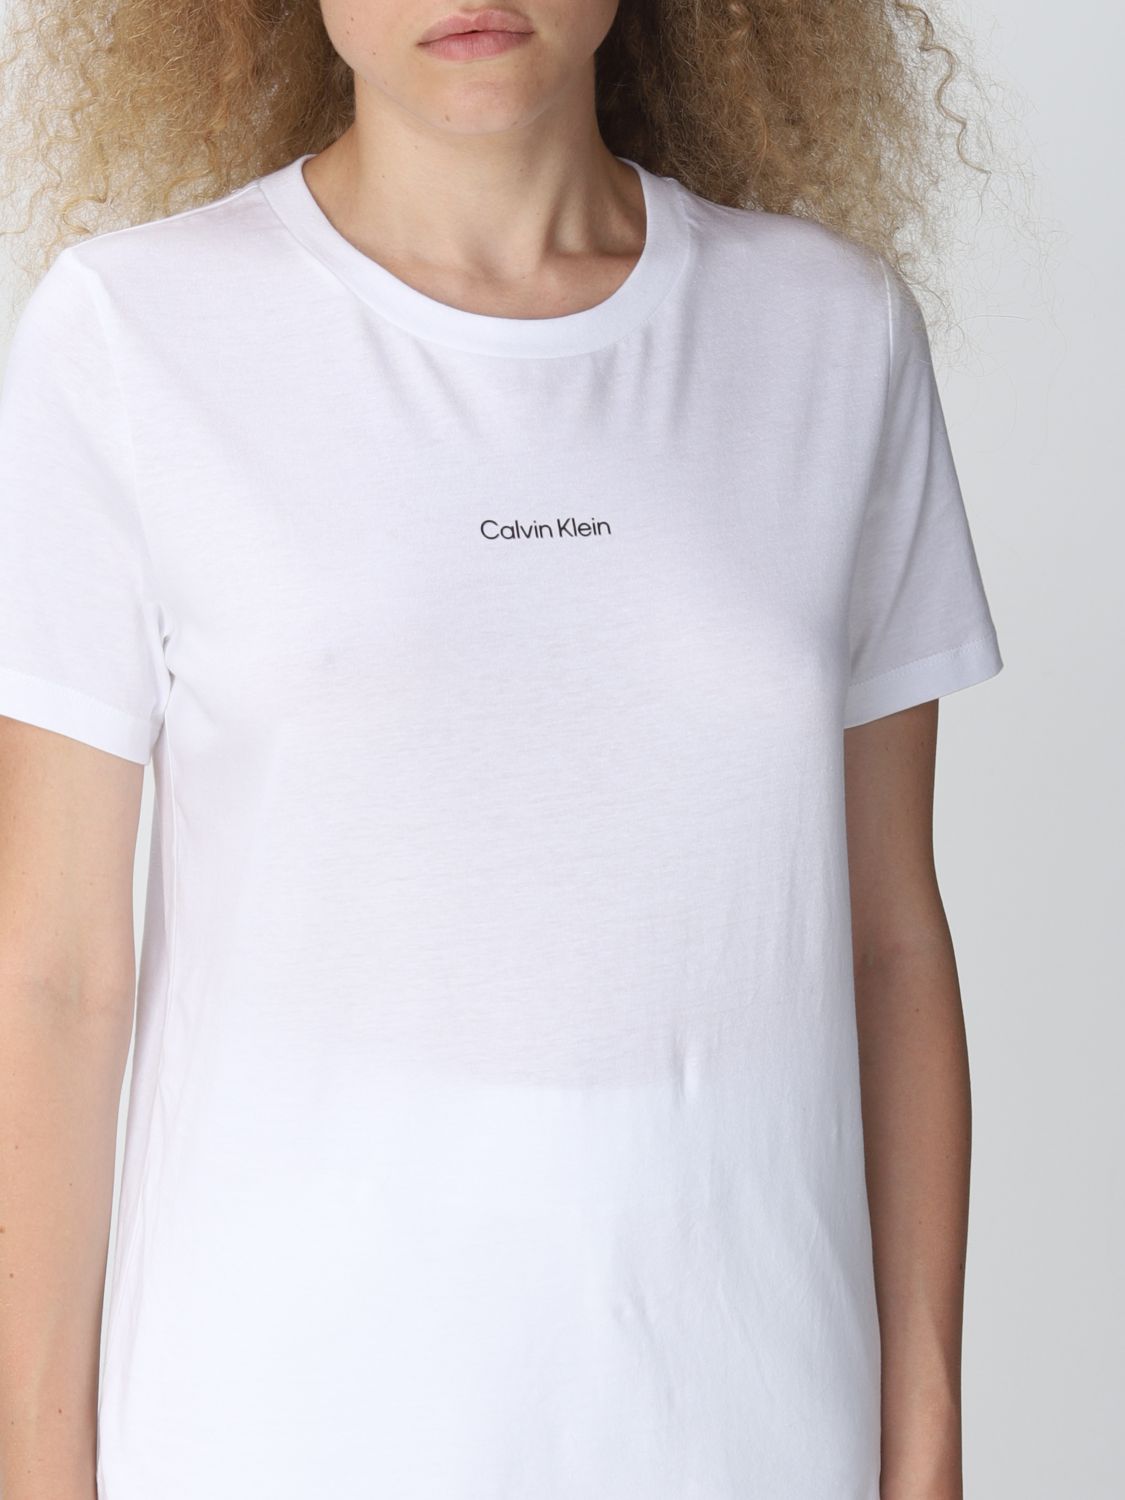 CALVIN KLEIN: Camiseta para Blanco | Camiseta Calvin Klein K20K203677 en